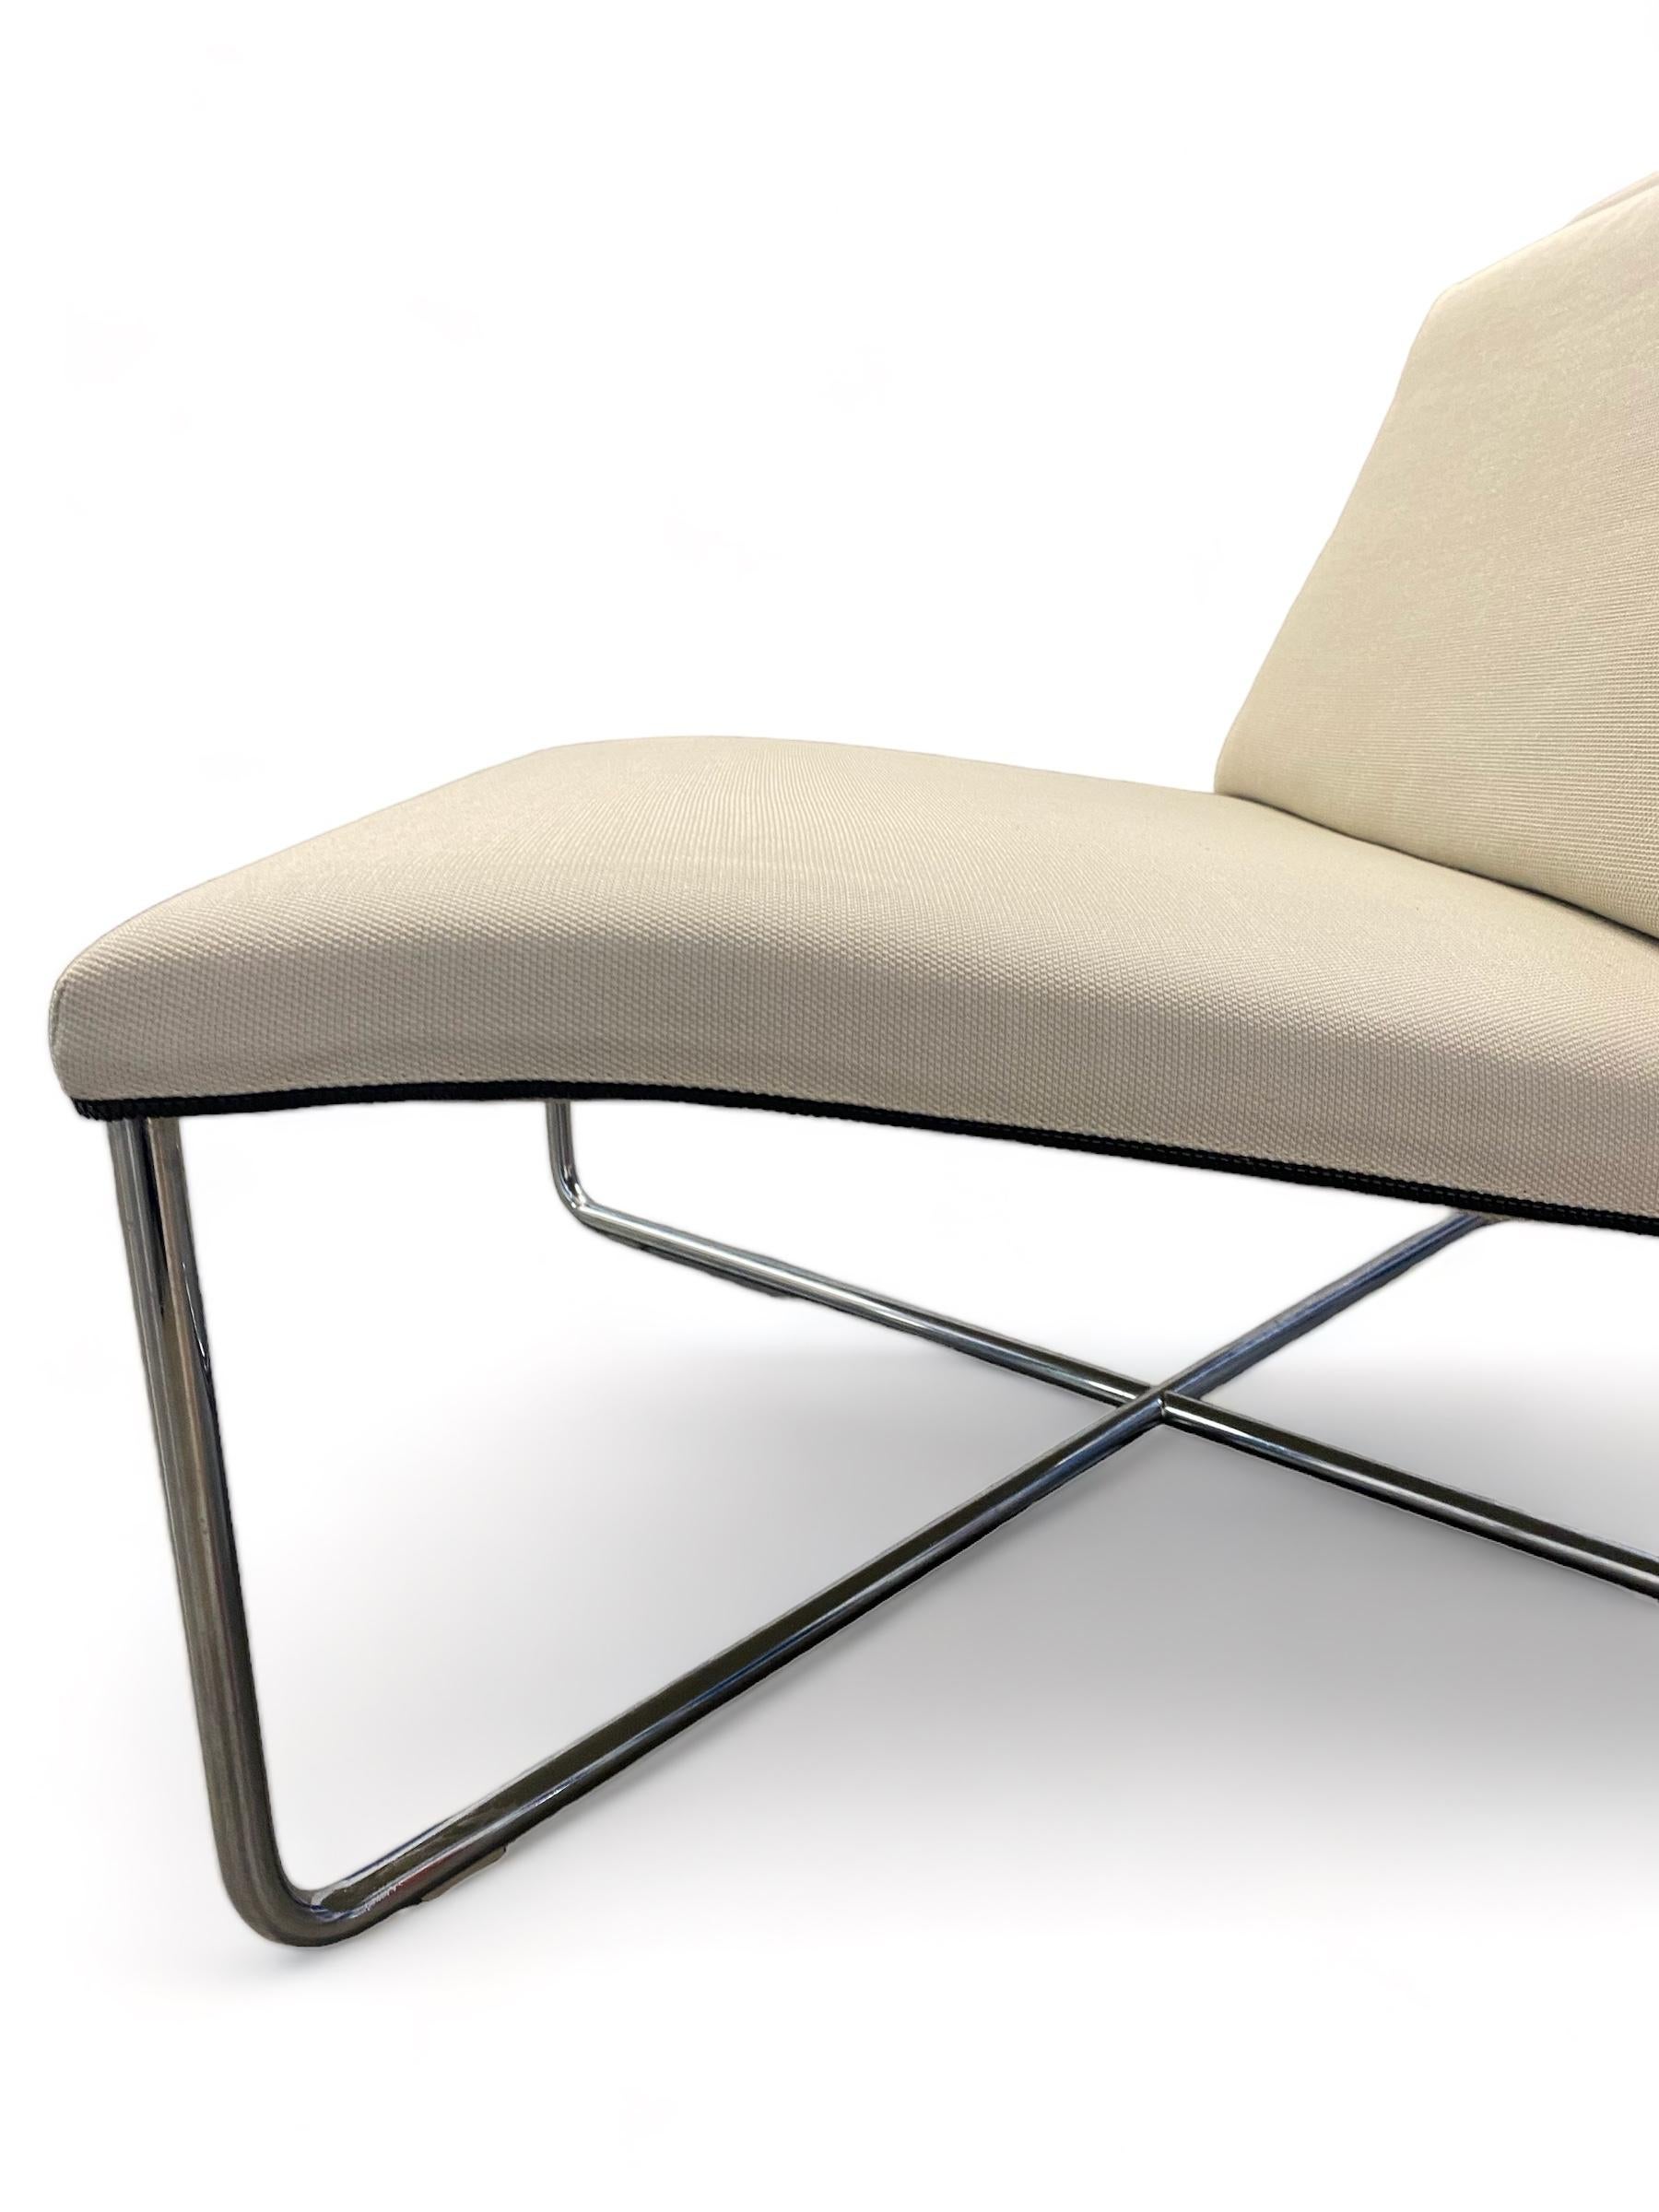 Linen White Diller chair designed by Rodolfo Dordoni for Minotti, Italy.